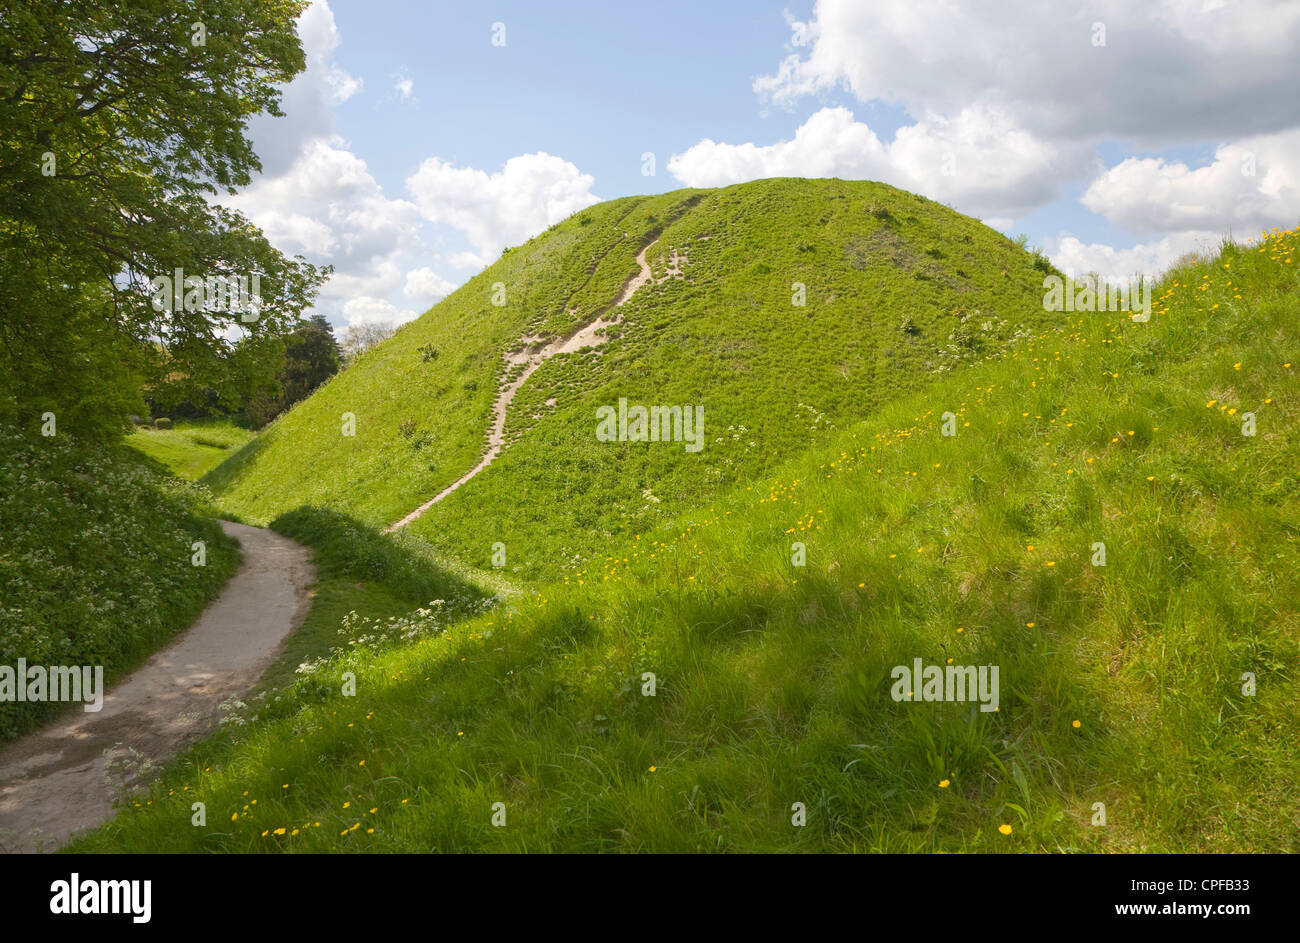 Thetford mound, a medieval motte and bailey castle, Thetford, Norfolk, England Stock Photo